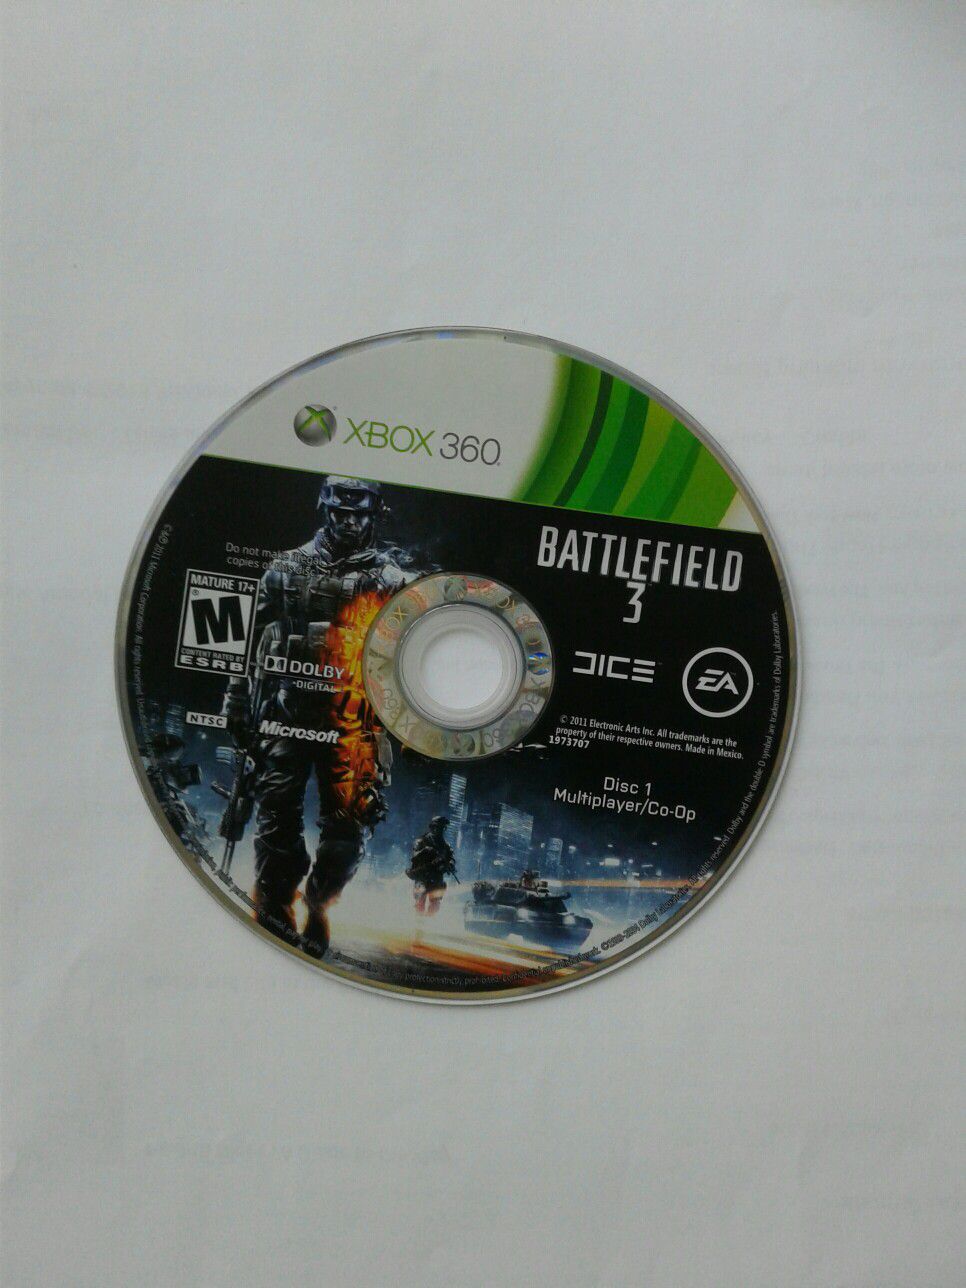 Xbox 360 BATTLEFIELD 3 game disc